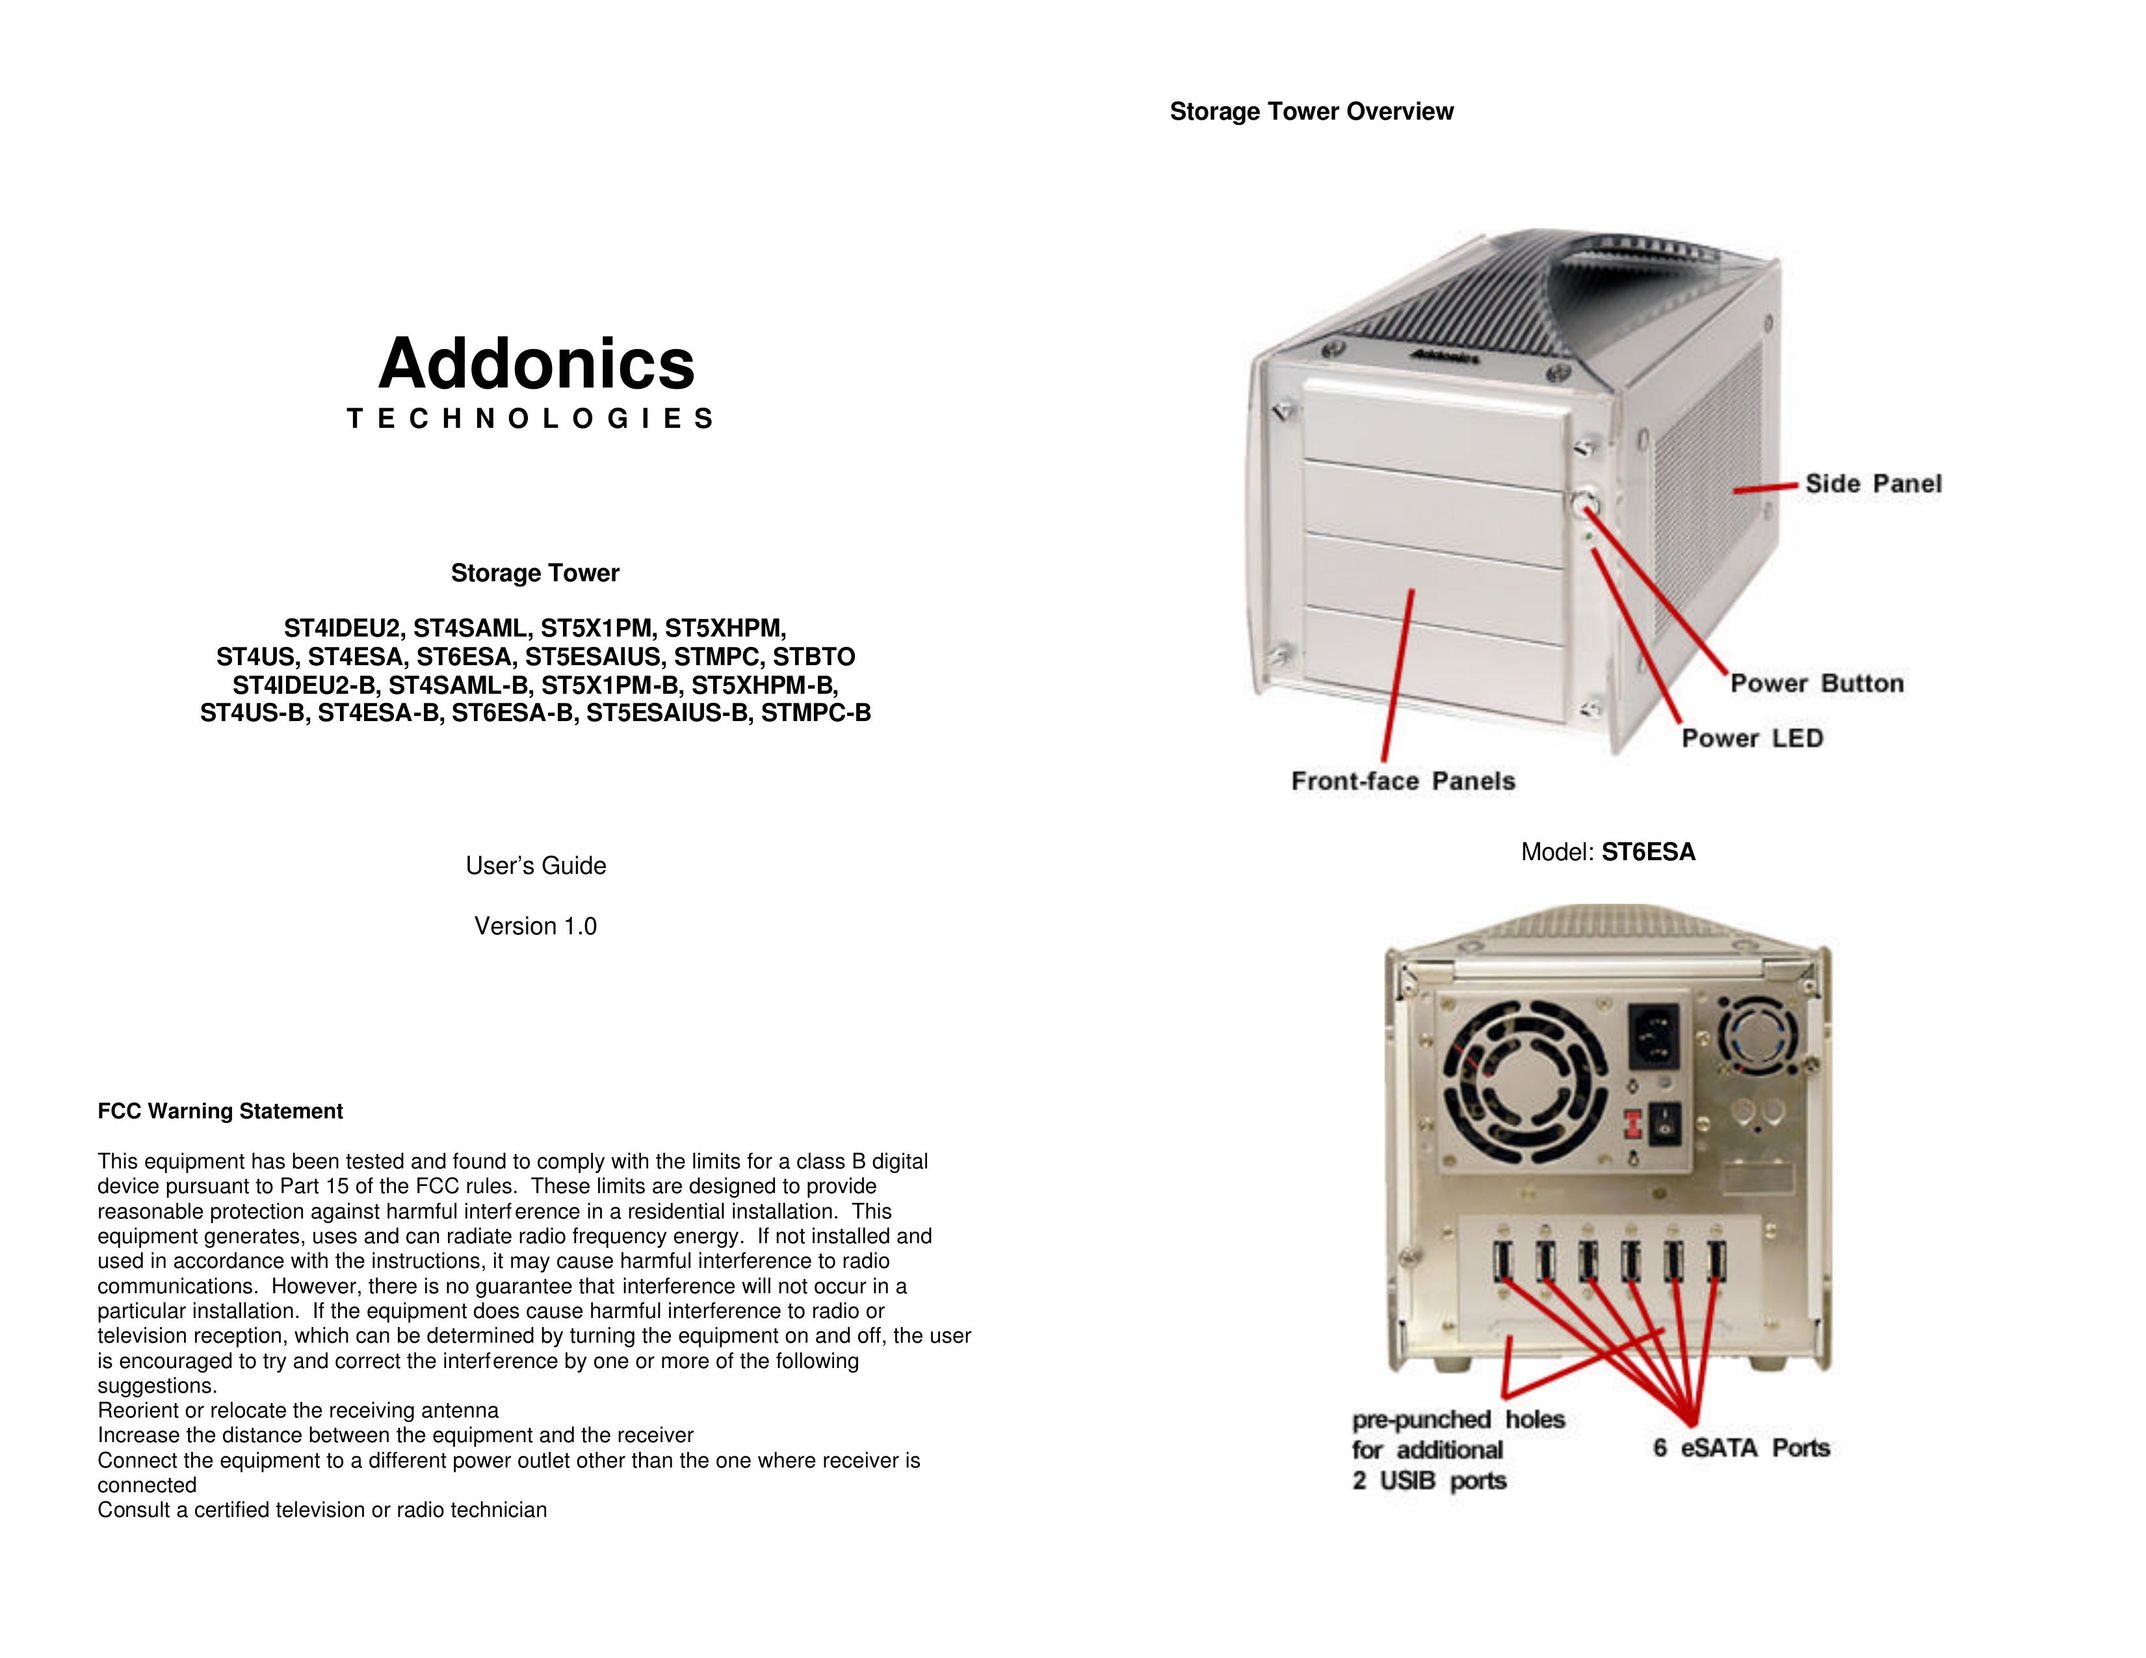 Addonics Technologies ST6ESA Portable Media Storage User Manual